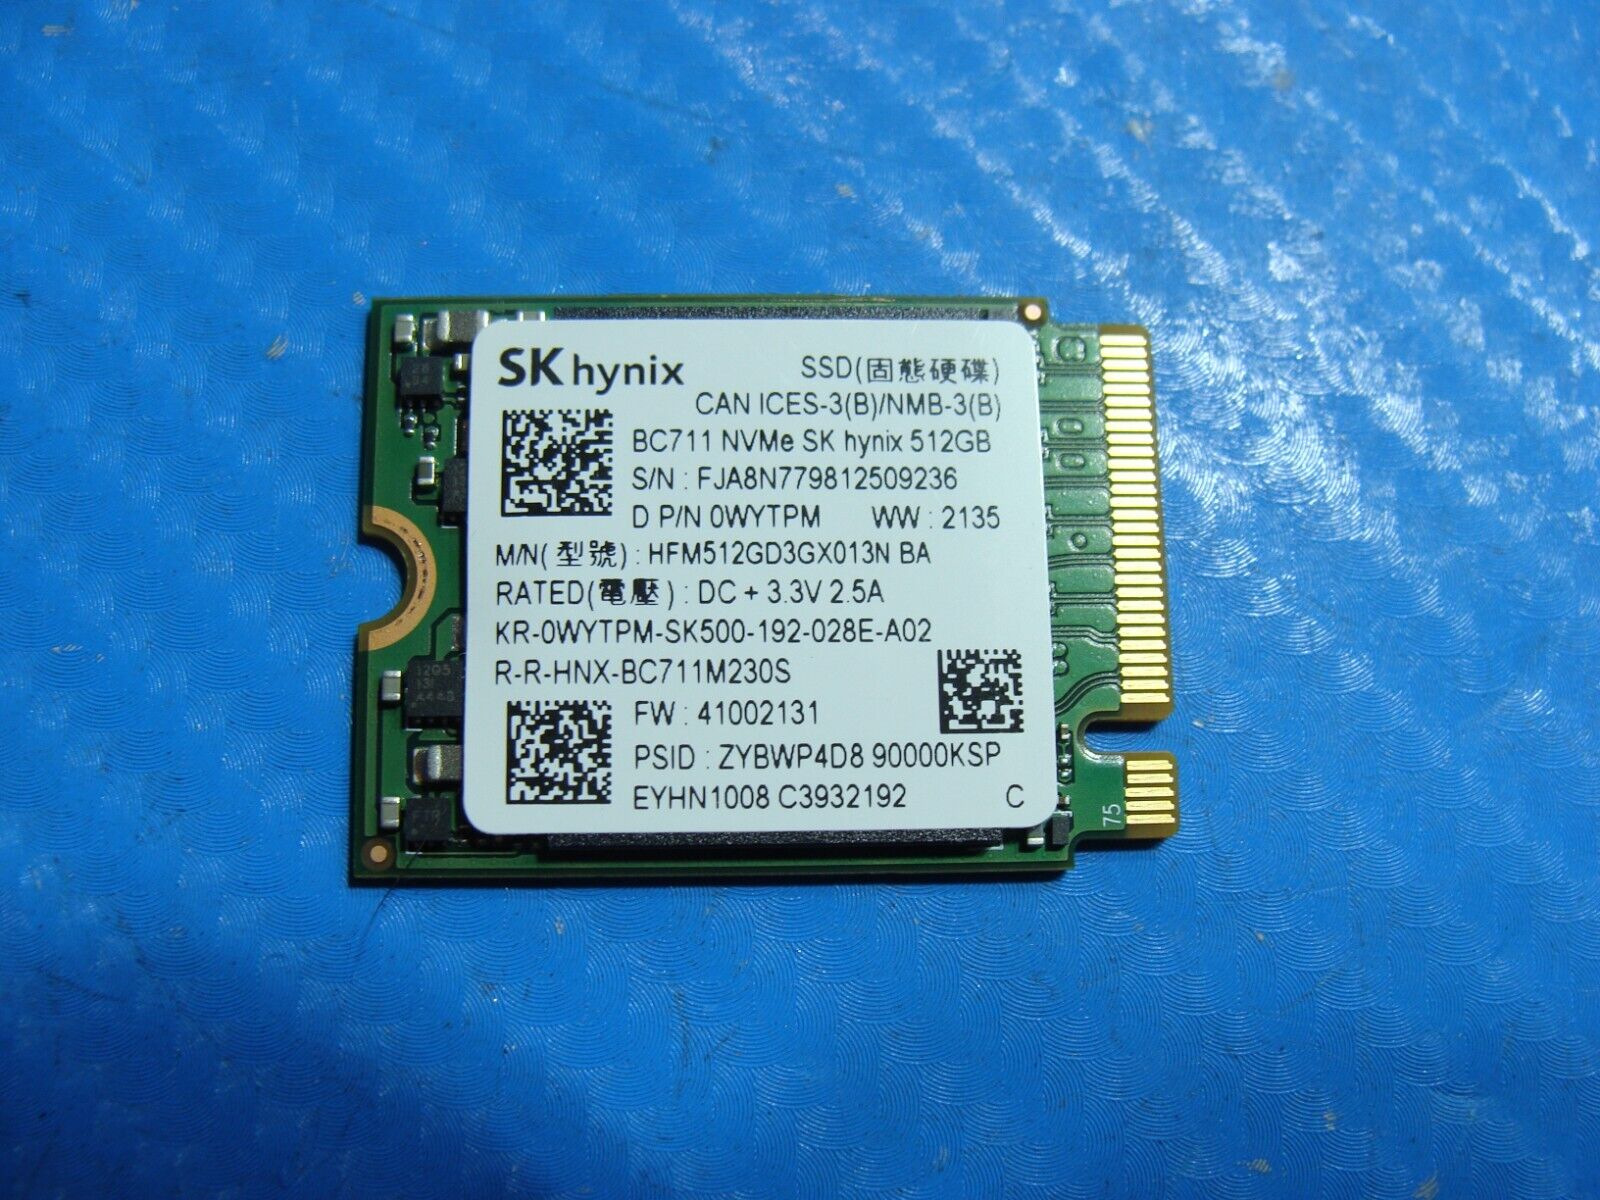 Dell 3420 SK Hynix 512GB NVMe M.2 SSD Solid State Drive HFM512GD3GX013N WYTPM